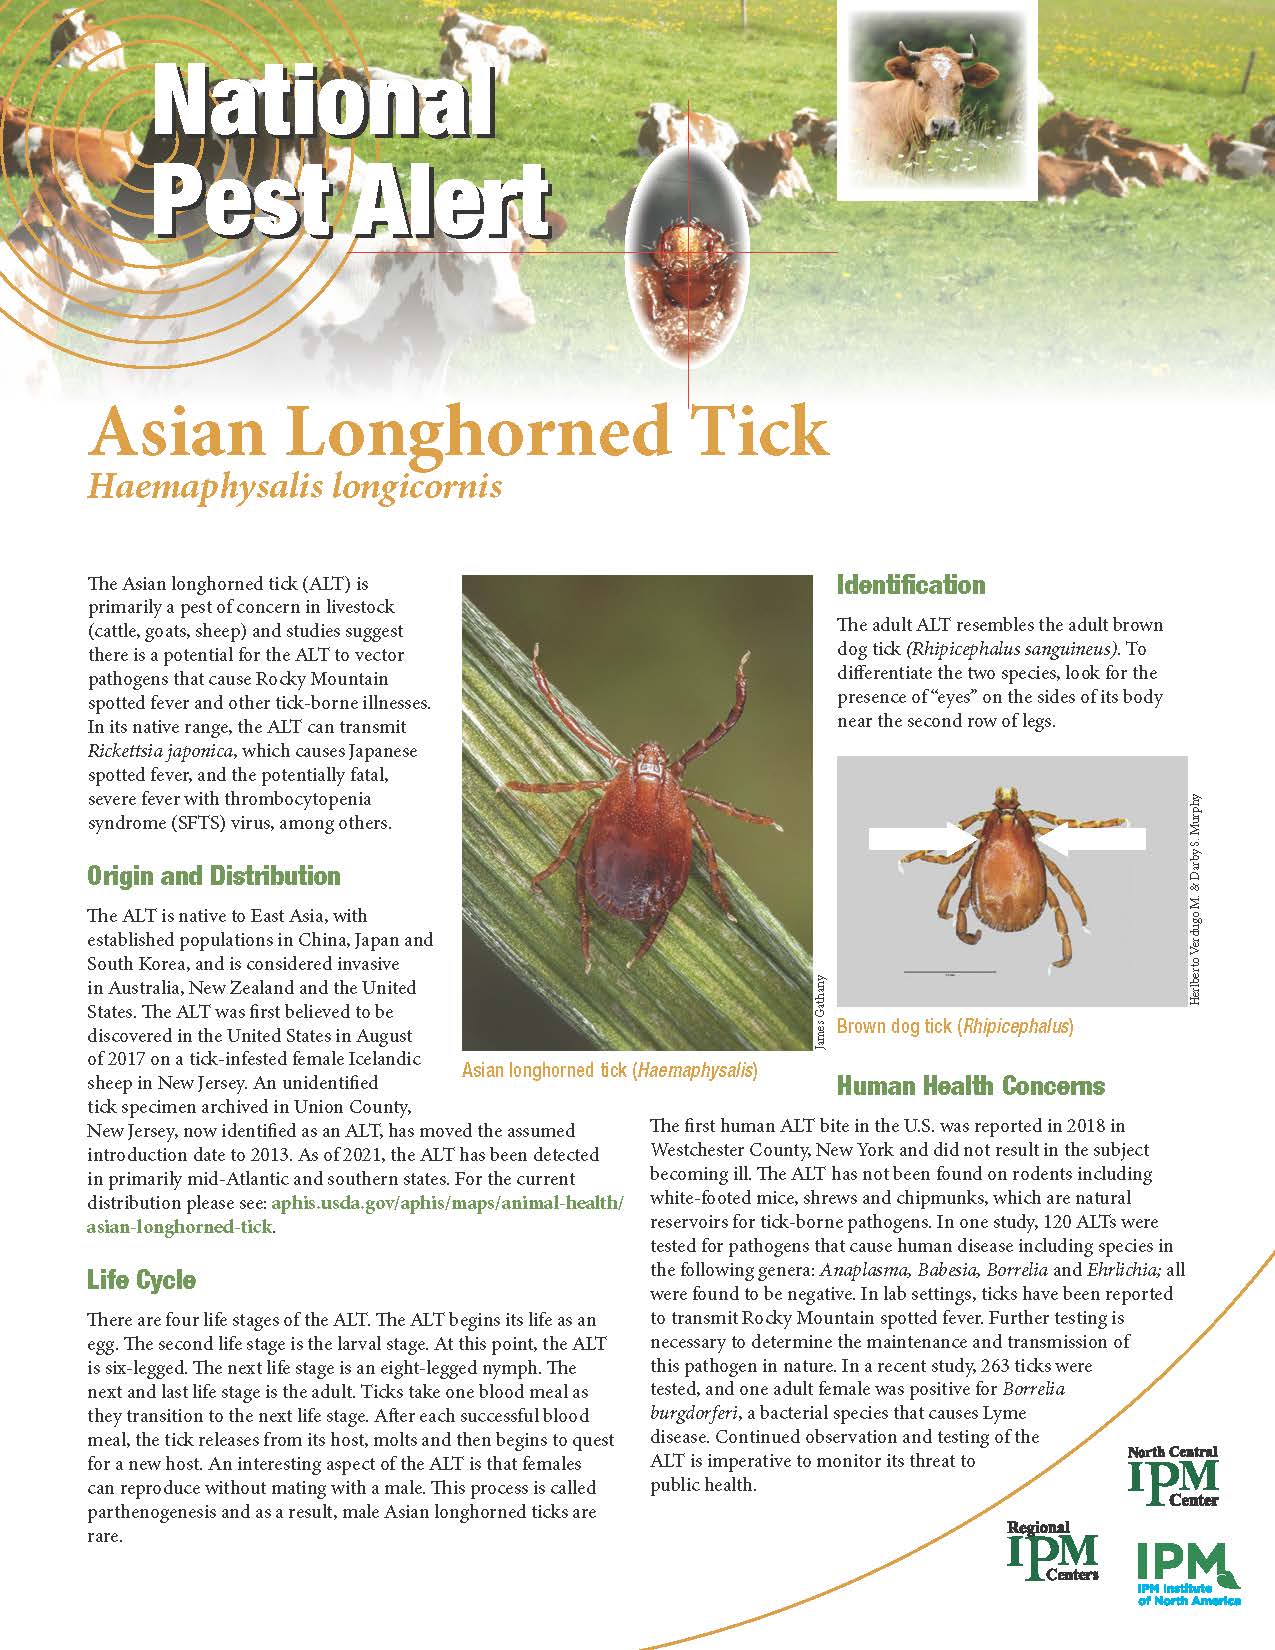 Asian Longhorned Tick Alert